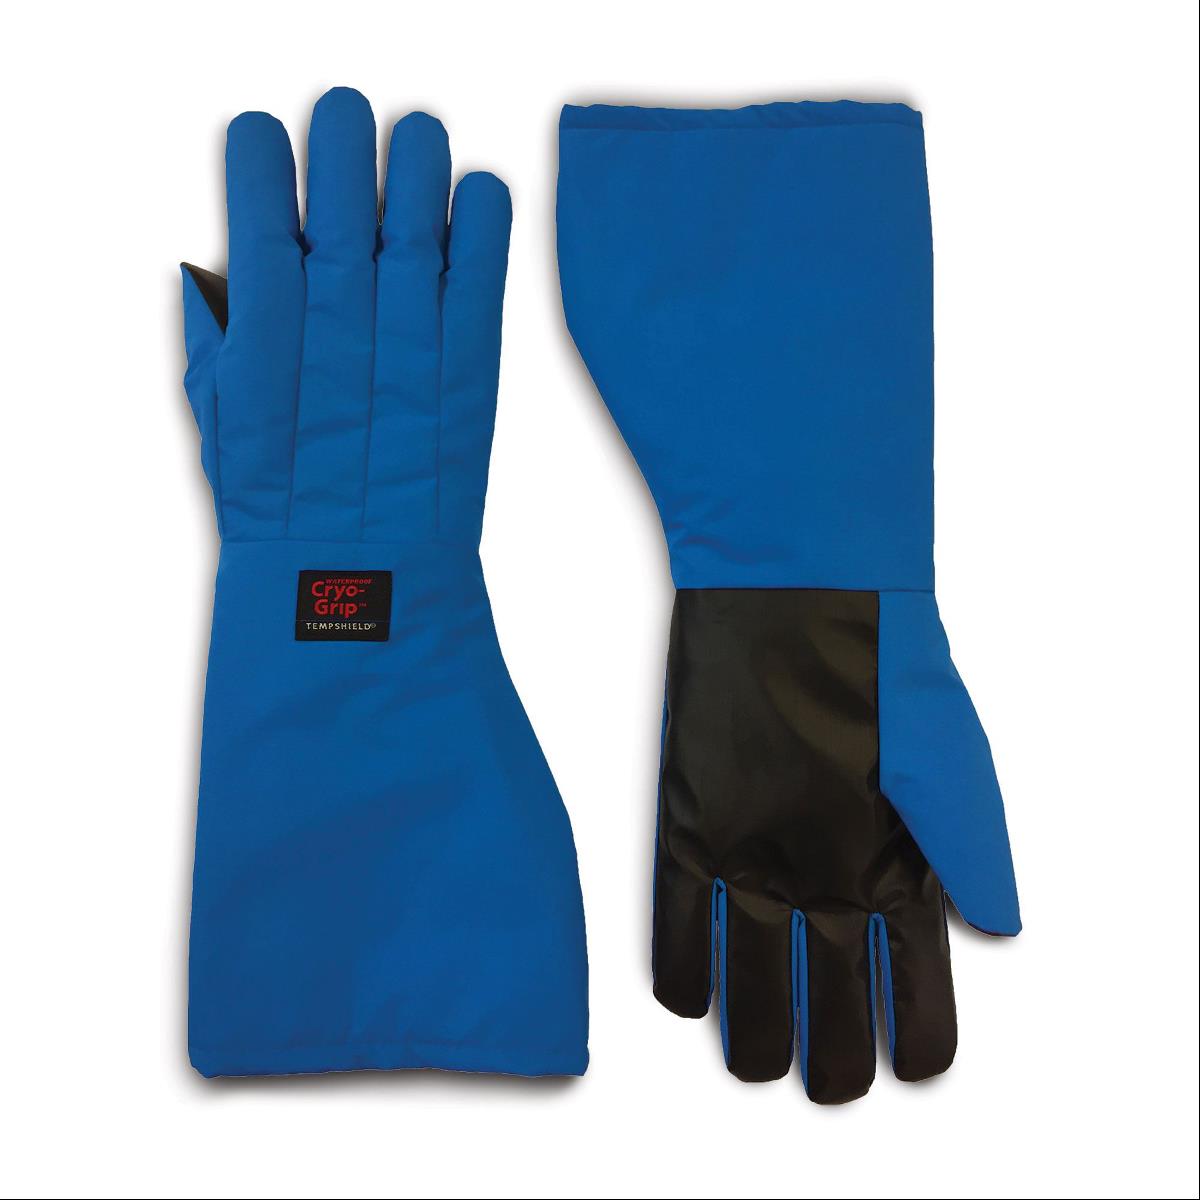 Cryo-Grip Elbow-Length Gloves